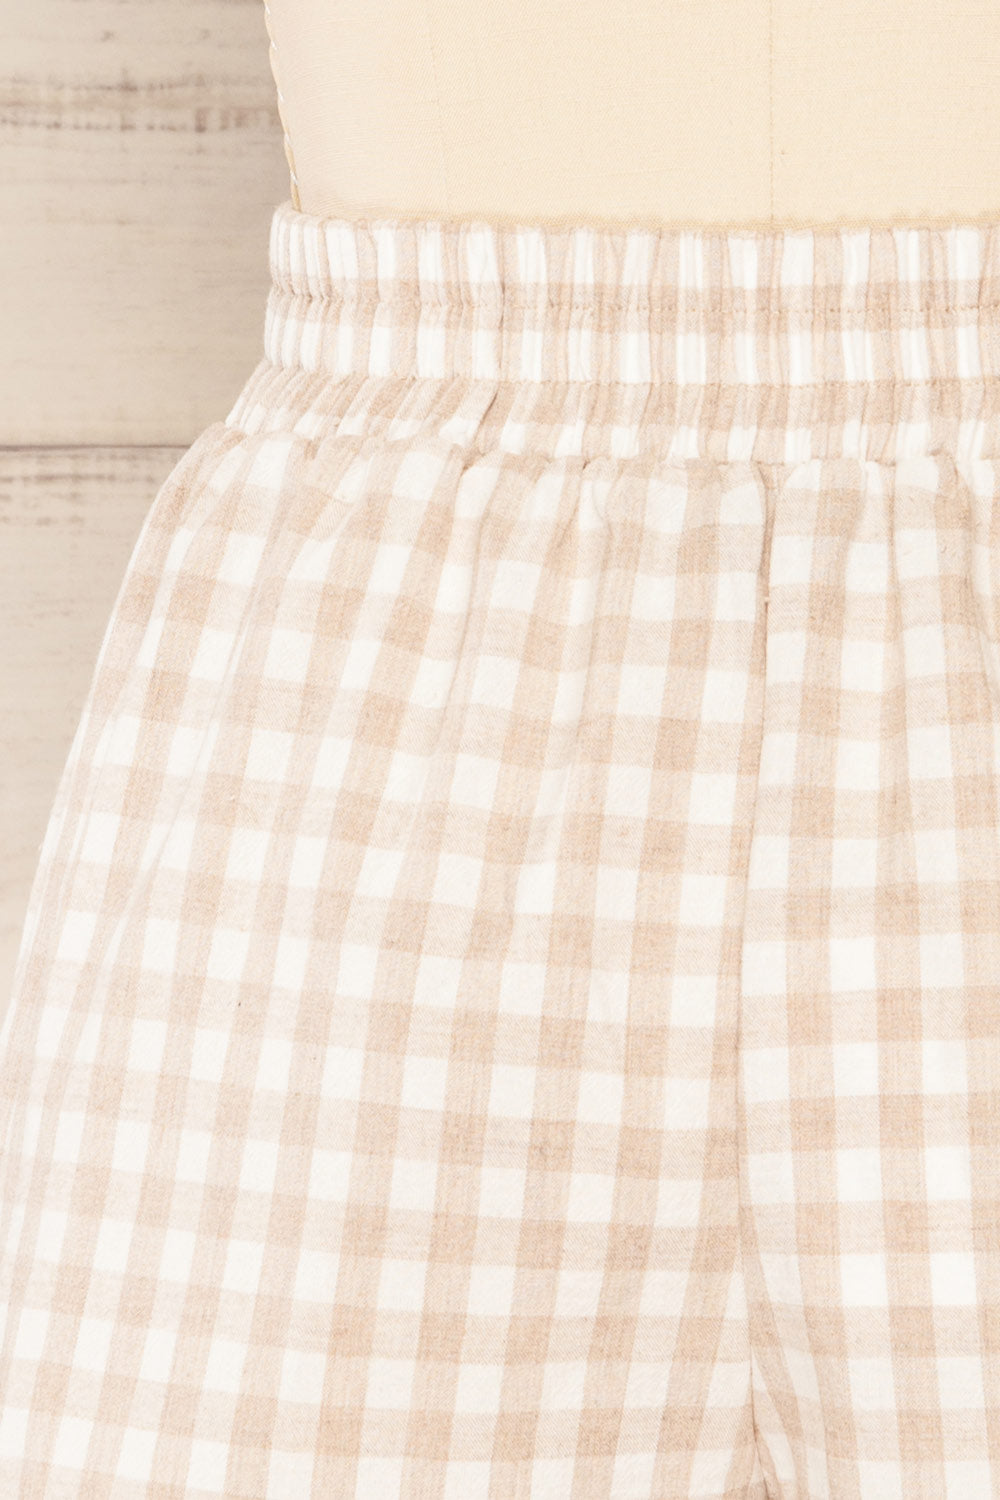 Macari Cream Gingham Print High-Waisted Shorts | La petite garçonne back close-up